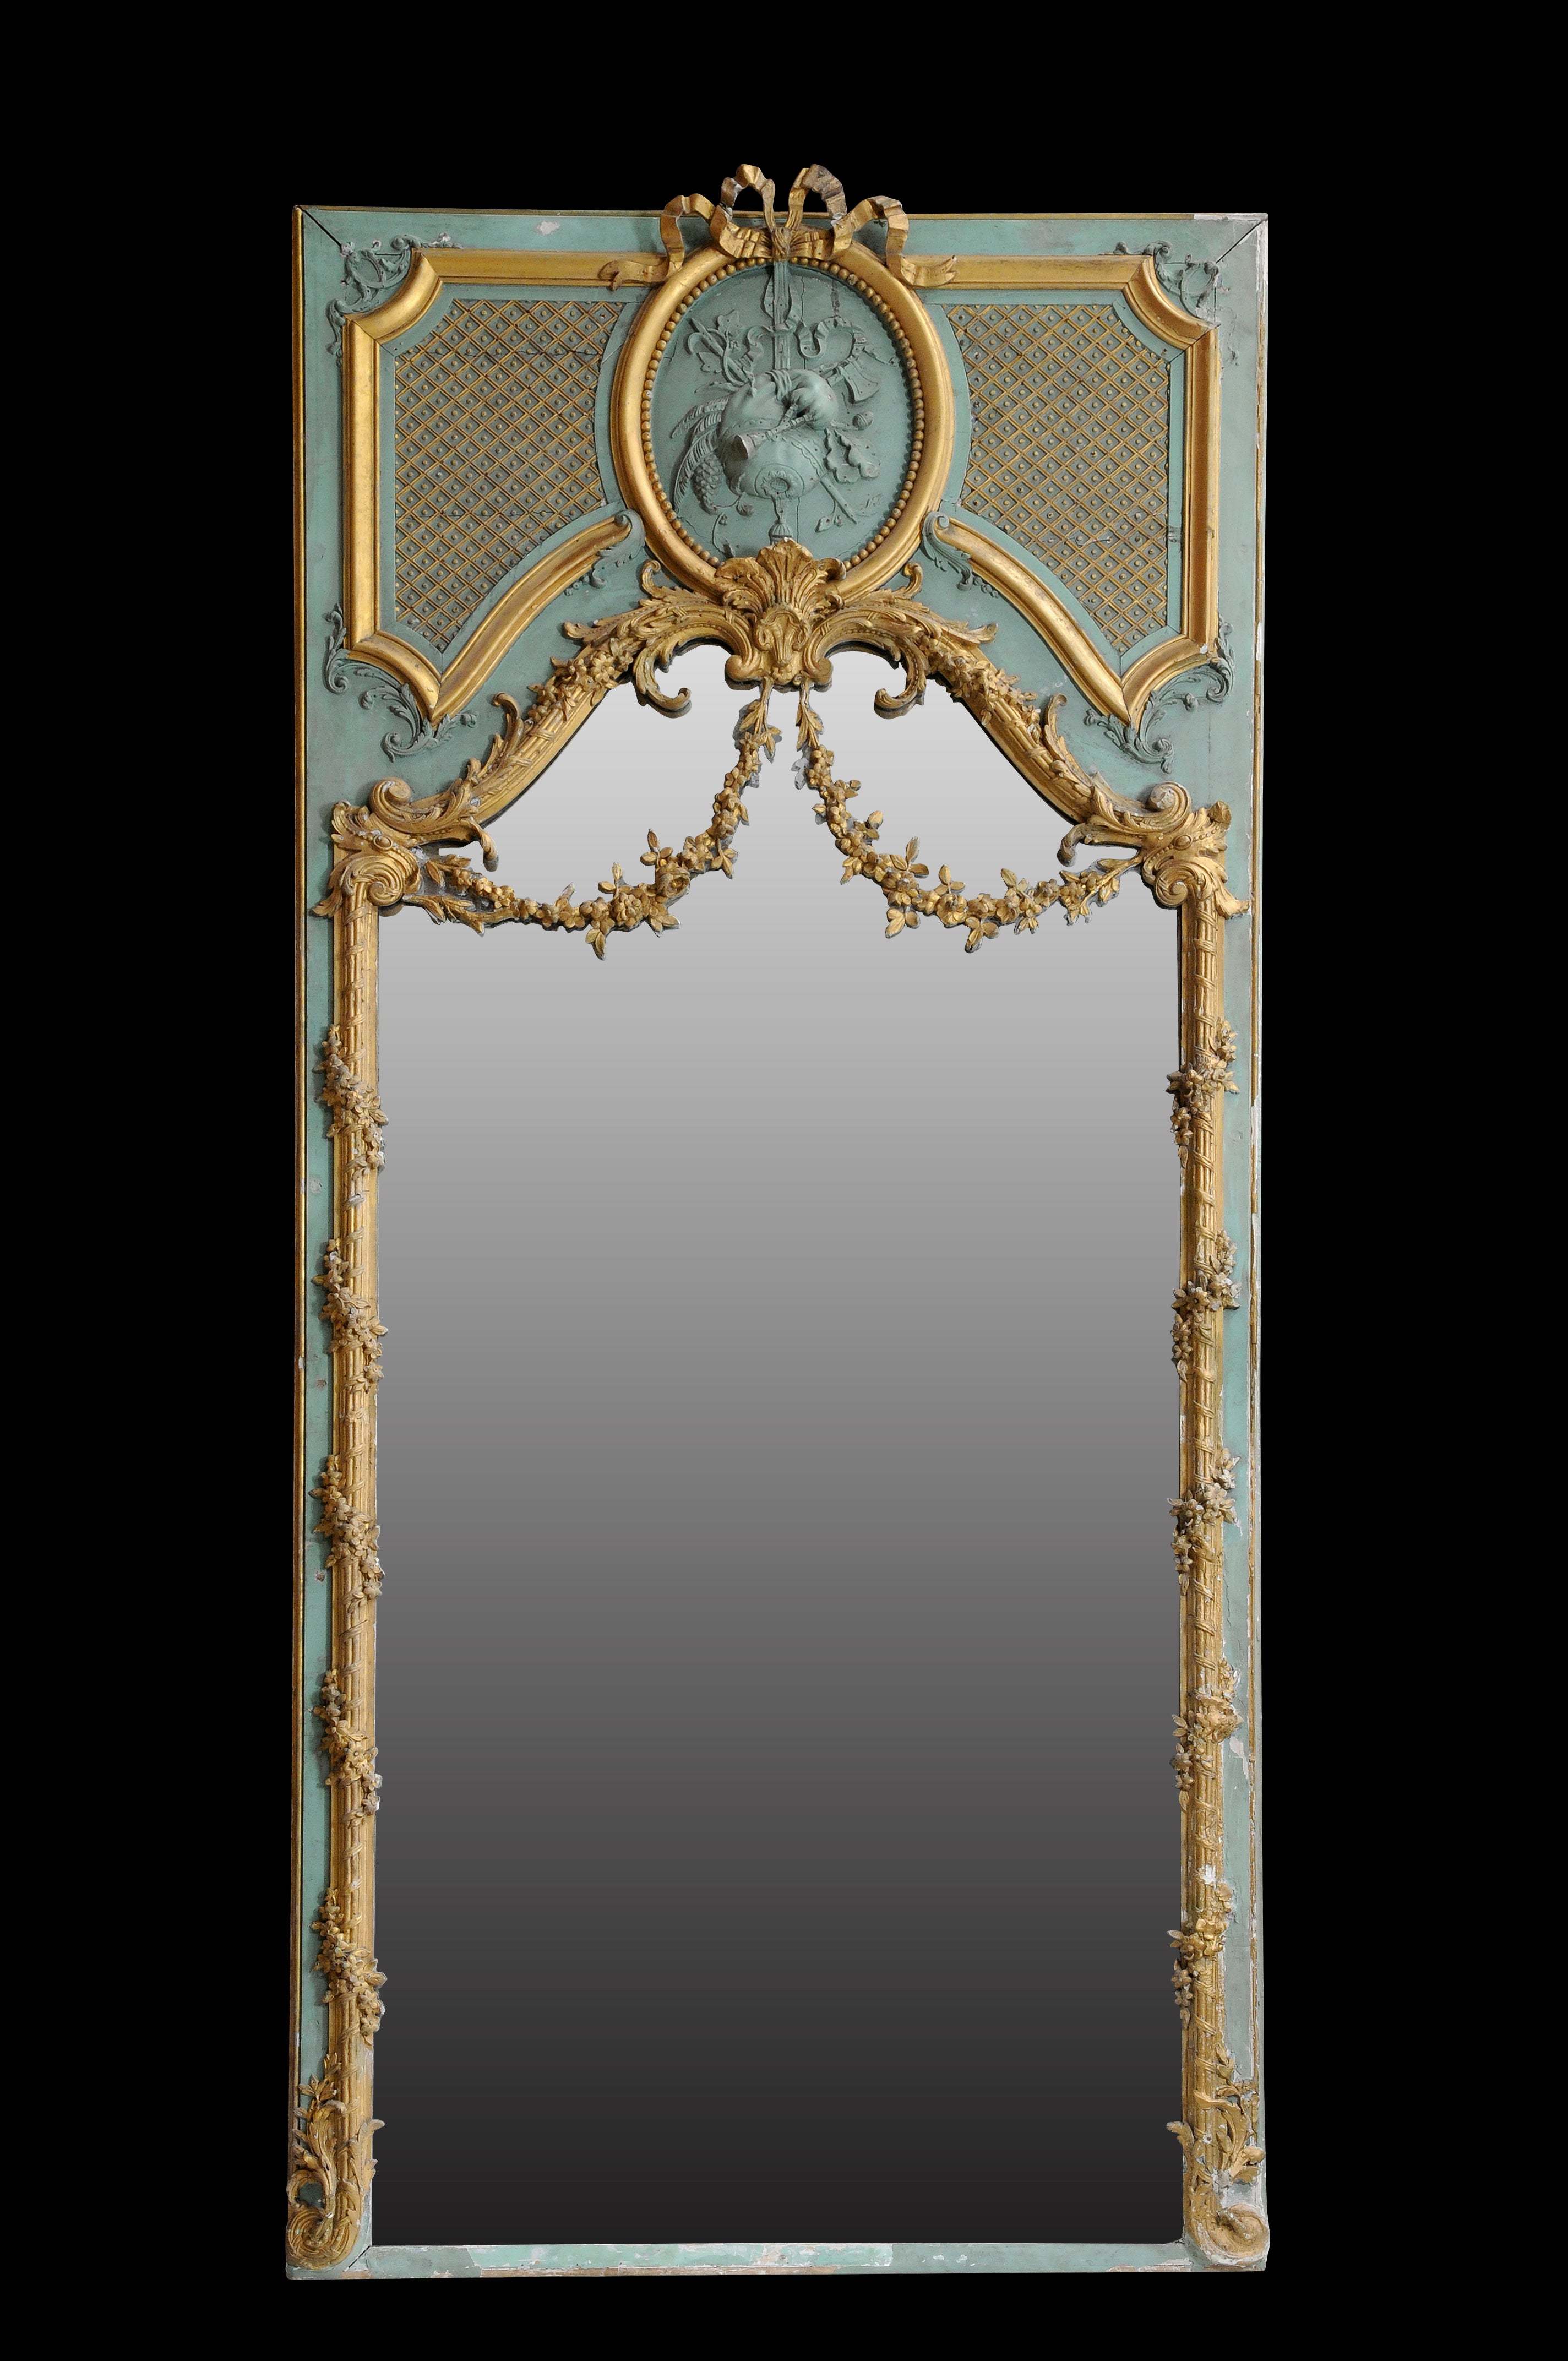 French Louis XVI style pierglass - 19th century